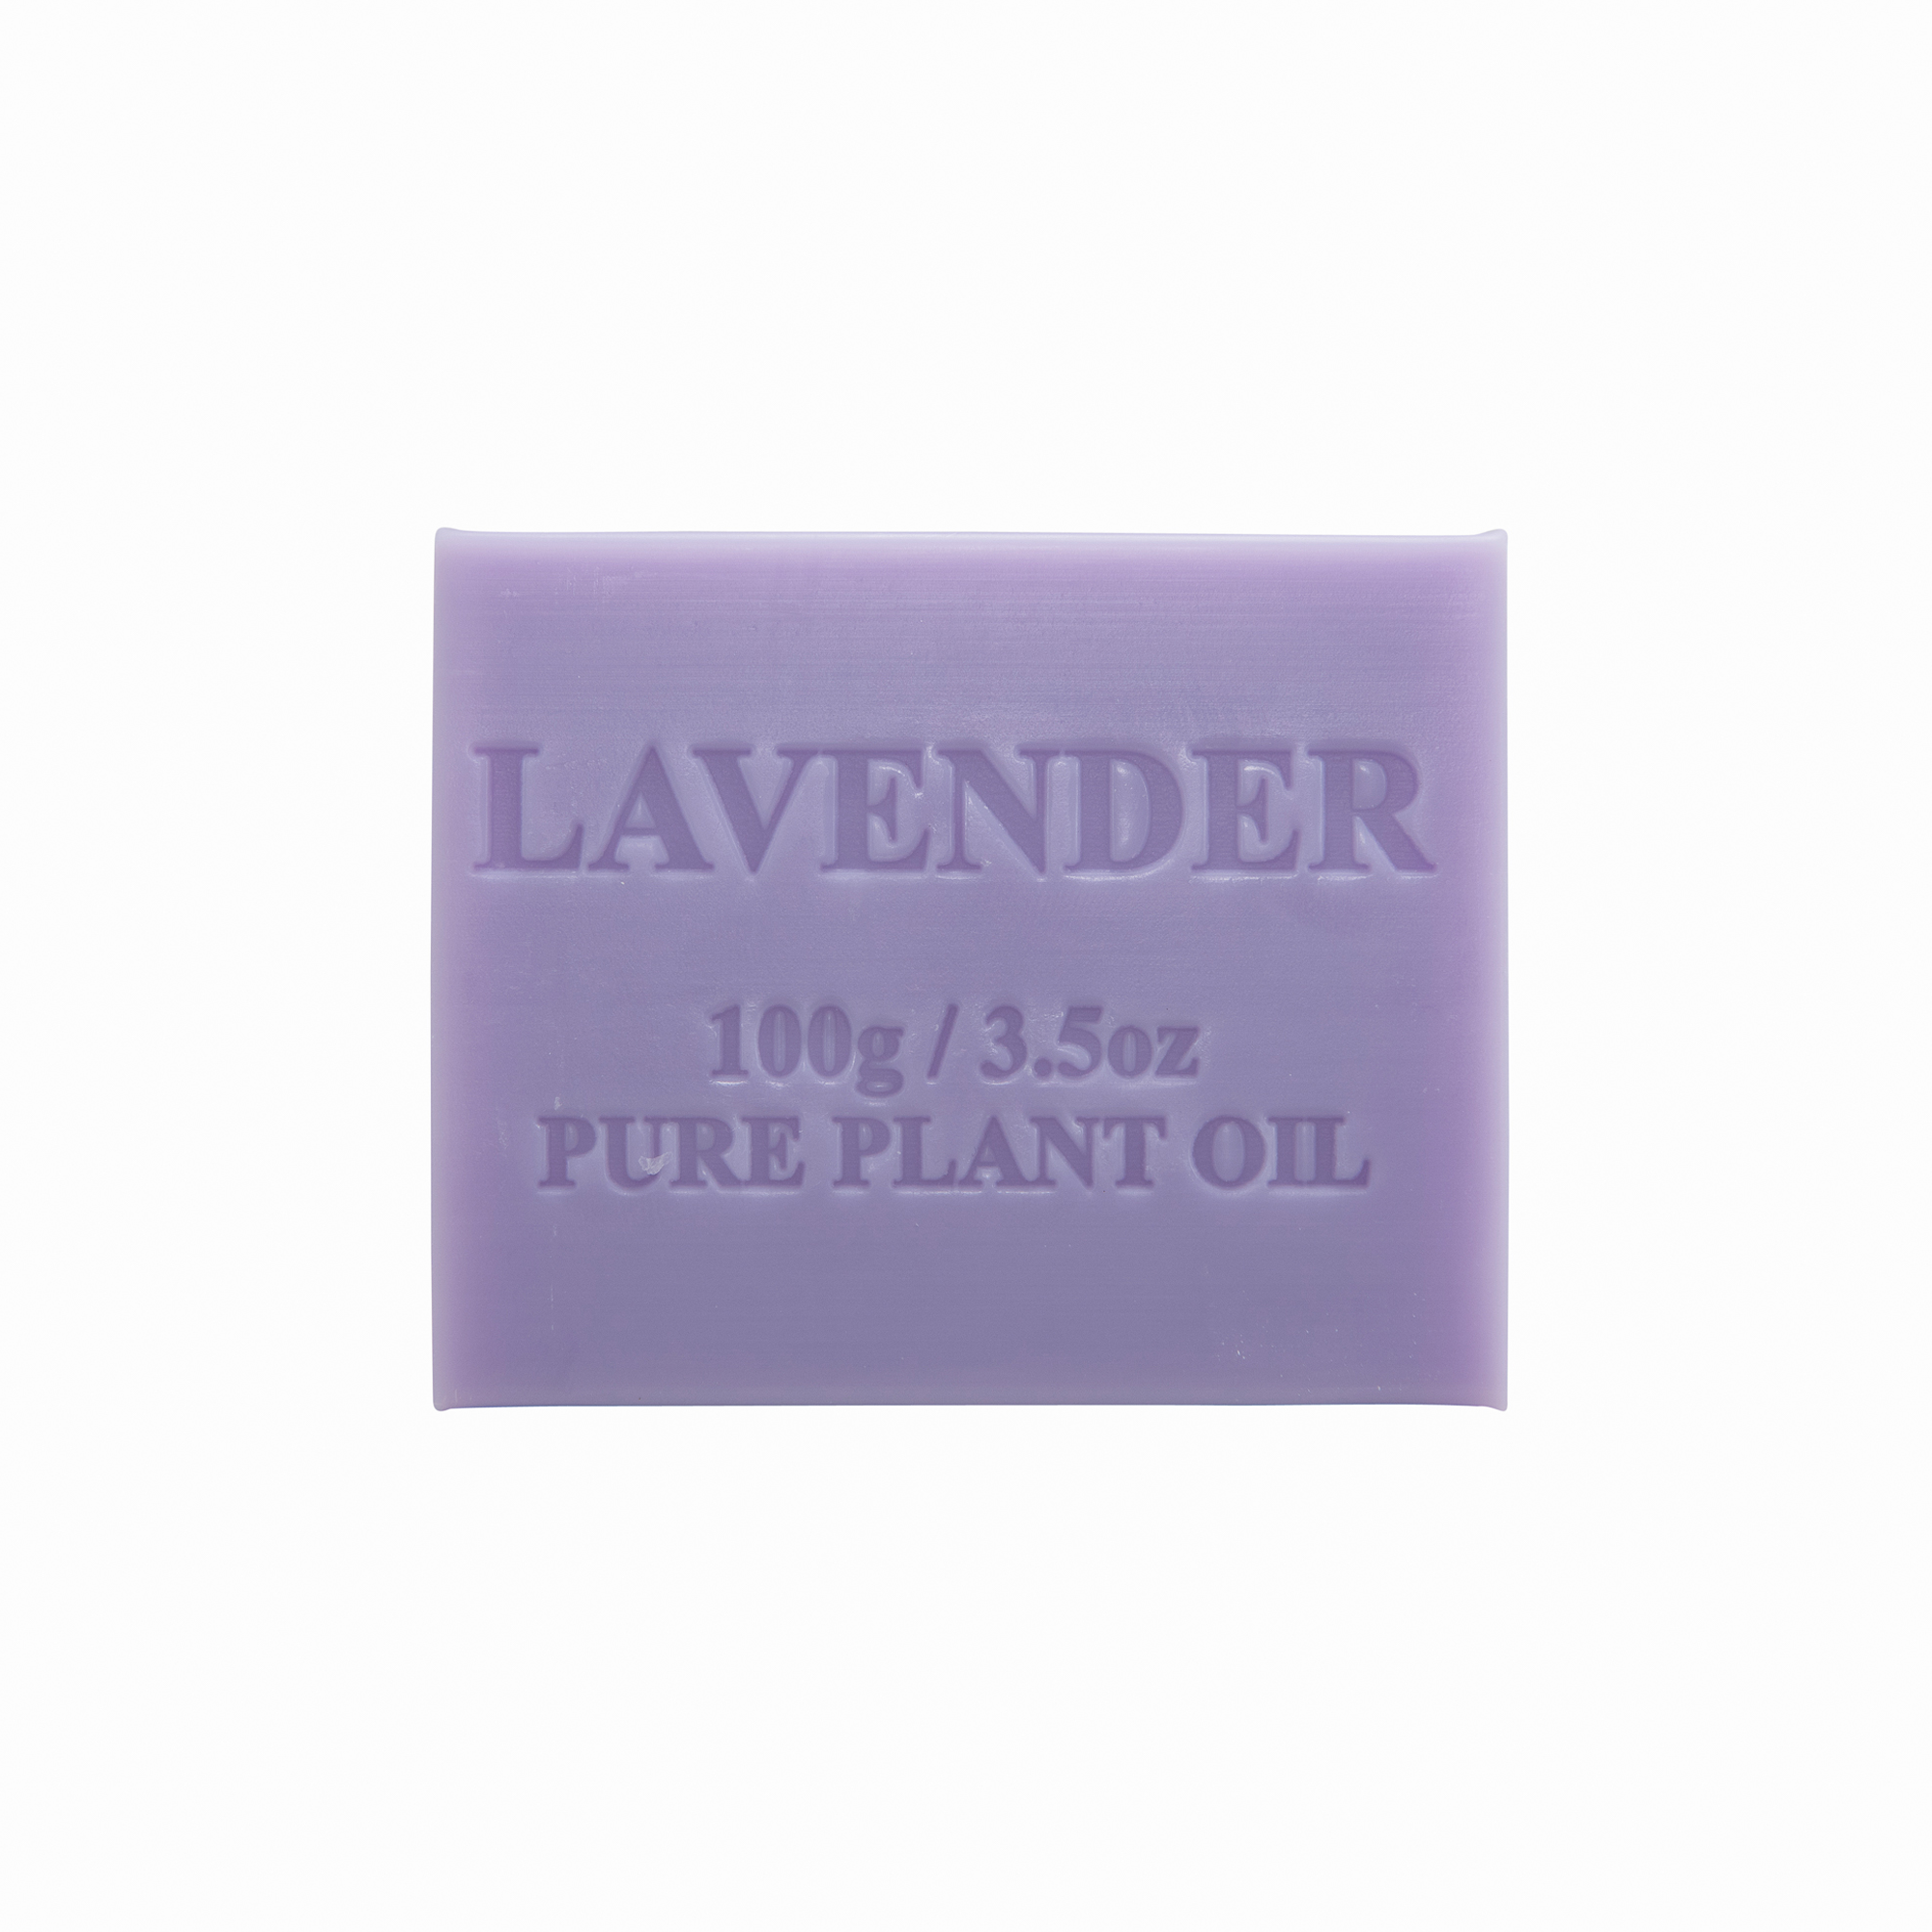 Lavender 100g